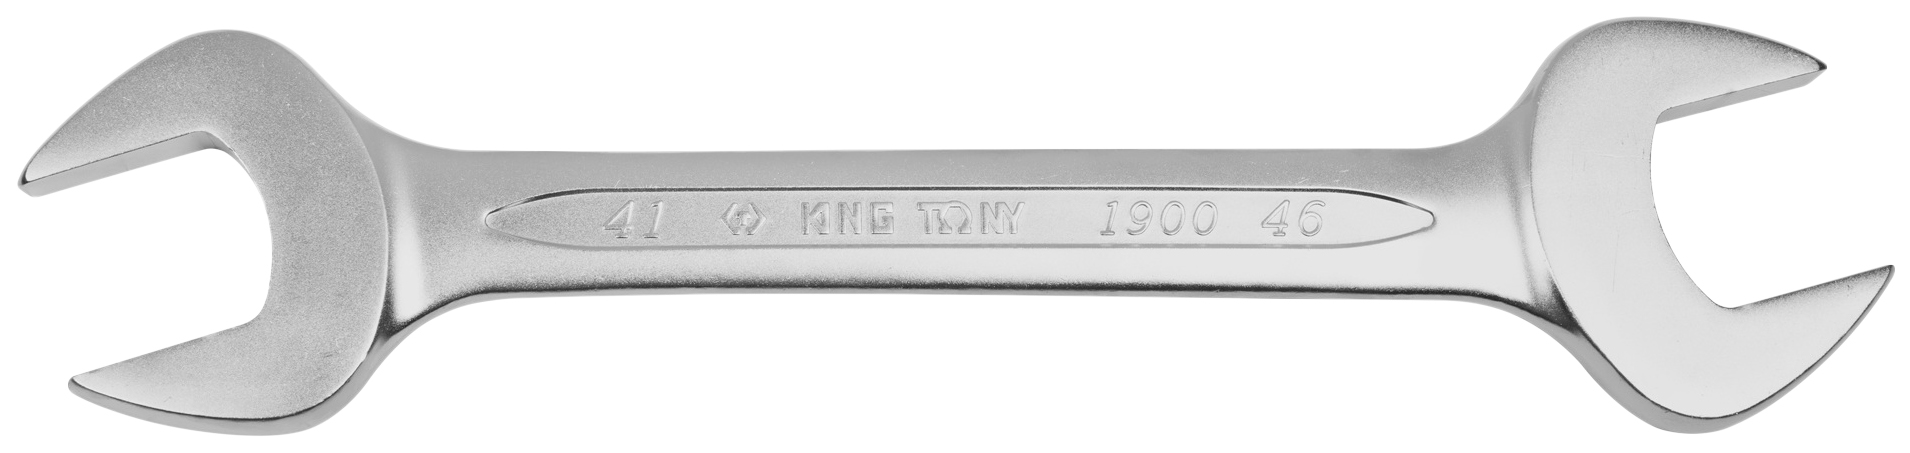 Рожковый ключ KING TONY 19004146 king tony ключ рожковый диэлектрический 16 мм king tony 10f0ve 16